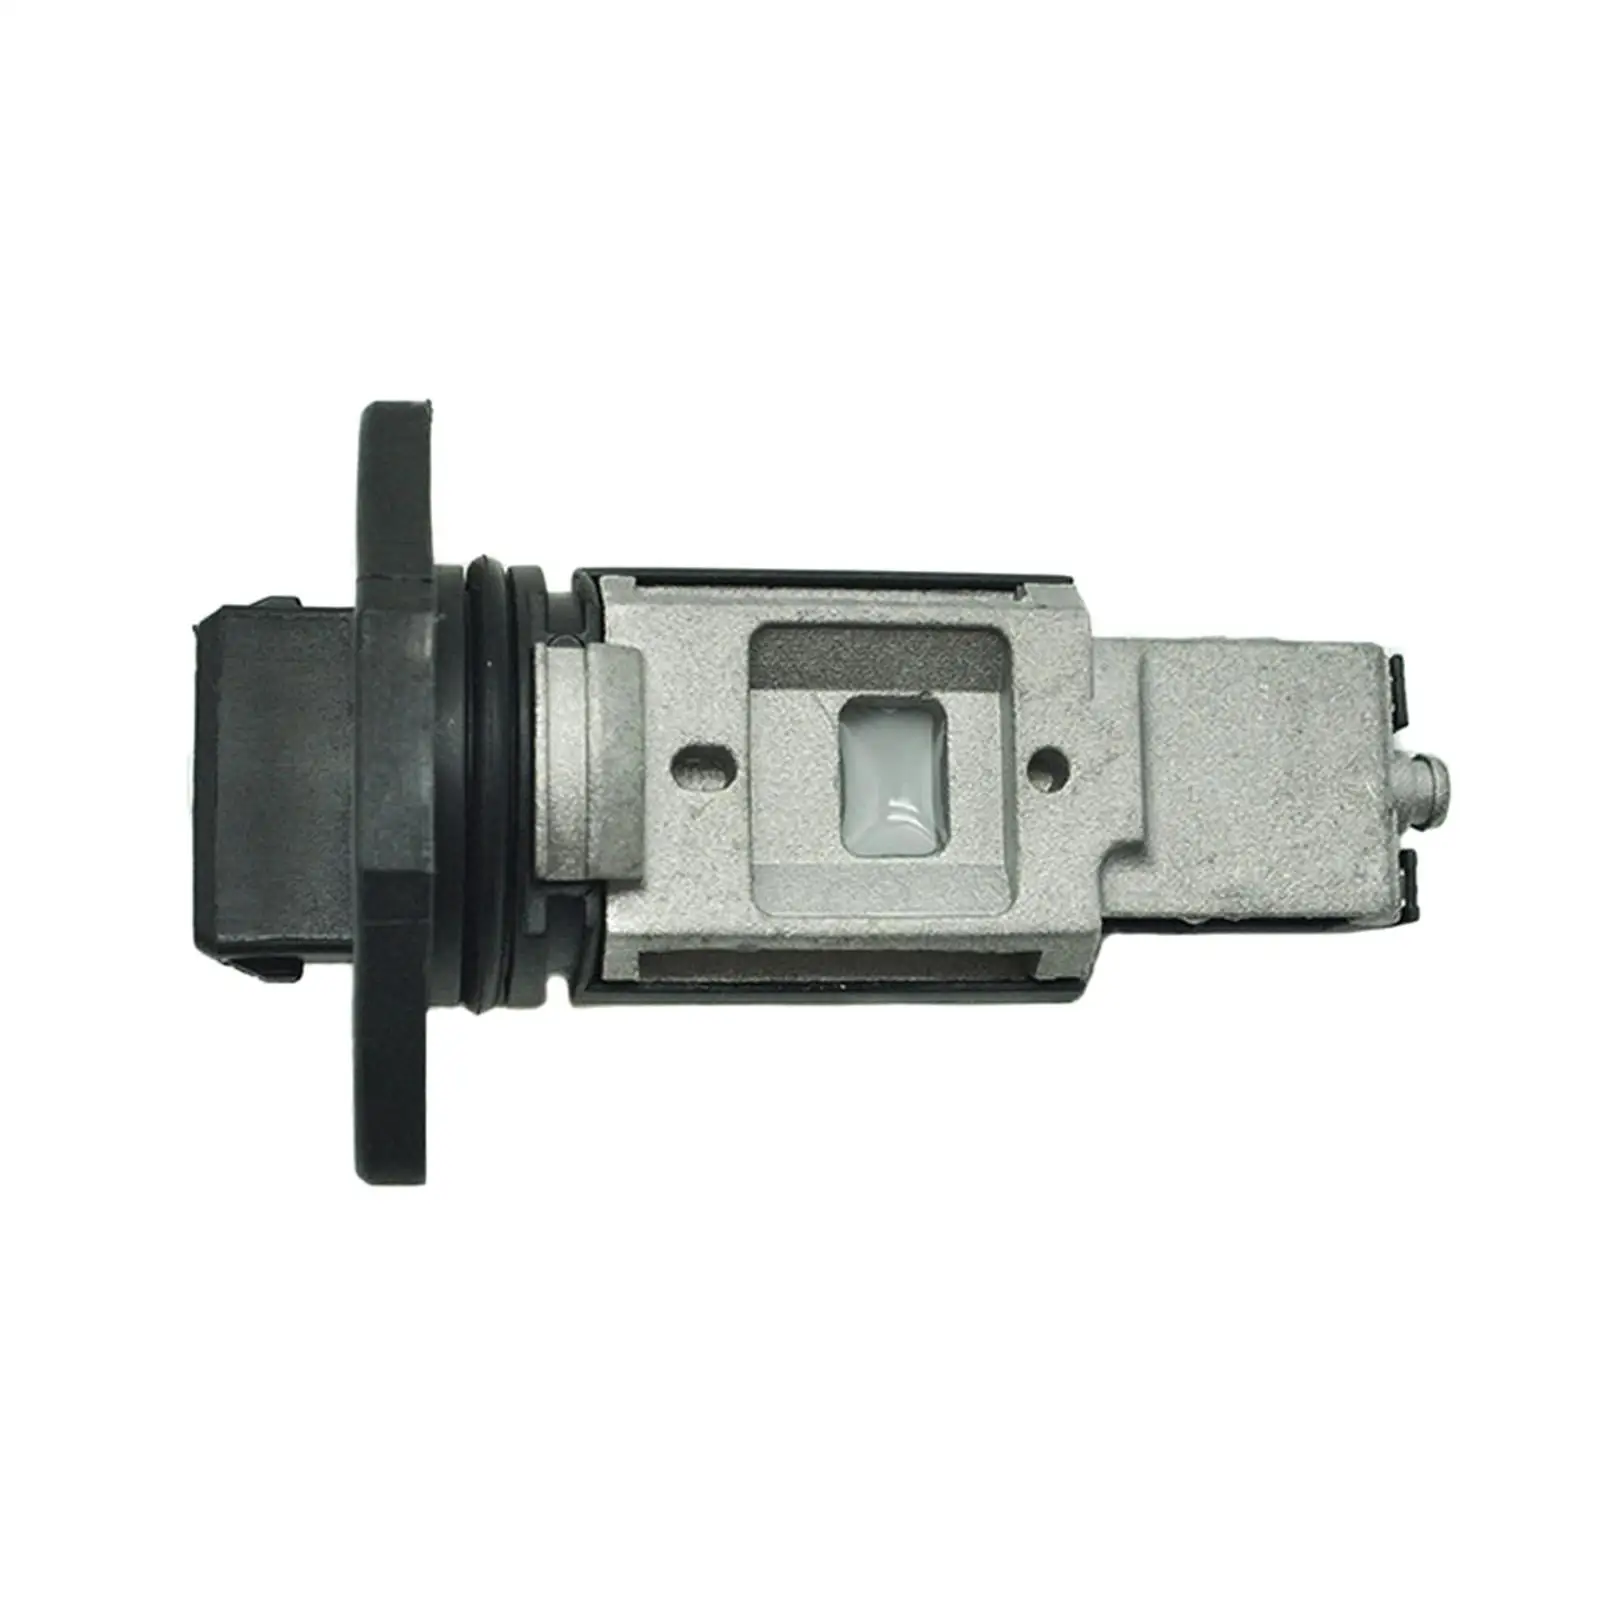 Mass Air Flow Sensor Replacement Parts Maf Meter Sensor, Fit for Audi A8 0280217804, 077133471D